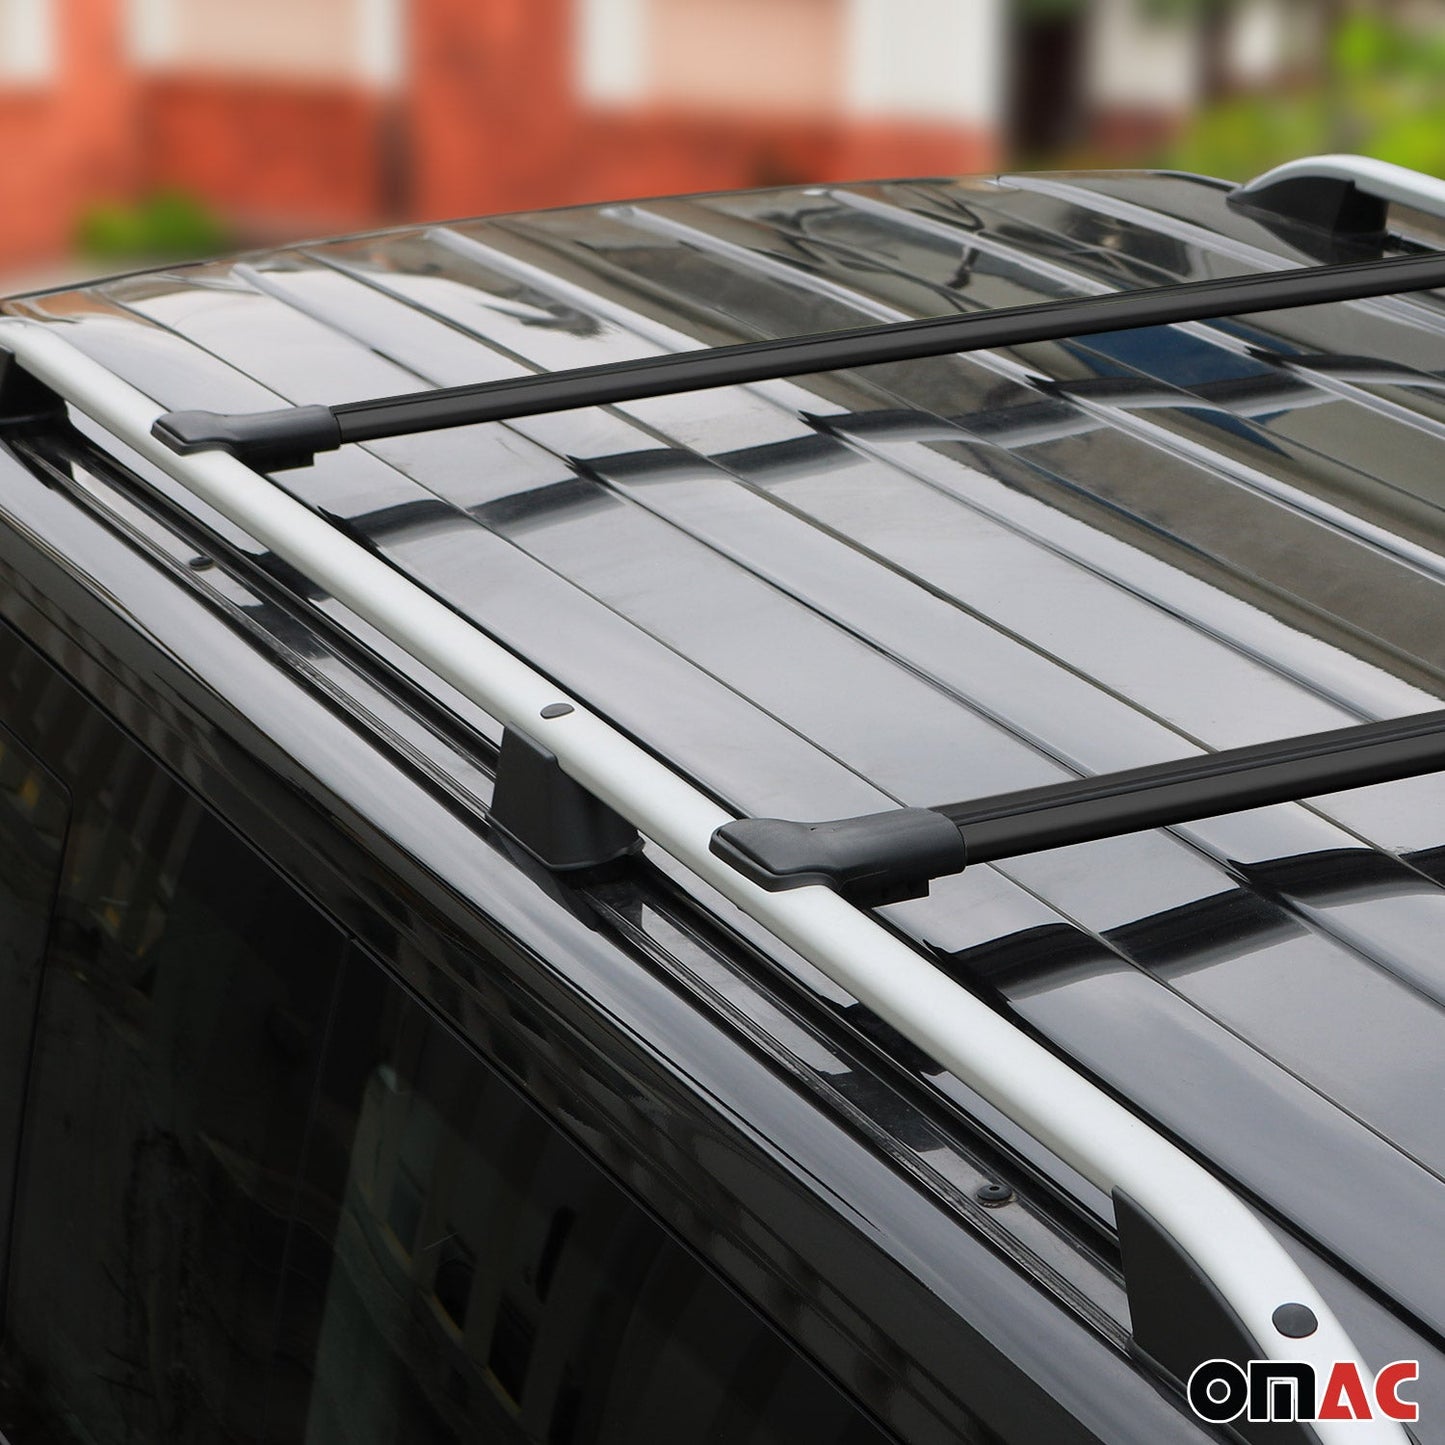 OMAC Roof Rack Cross Bars Luggage Carrier for Nissan Pathfinder 2005-2012 Black 2Pcs 5006928B